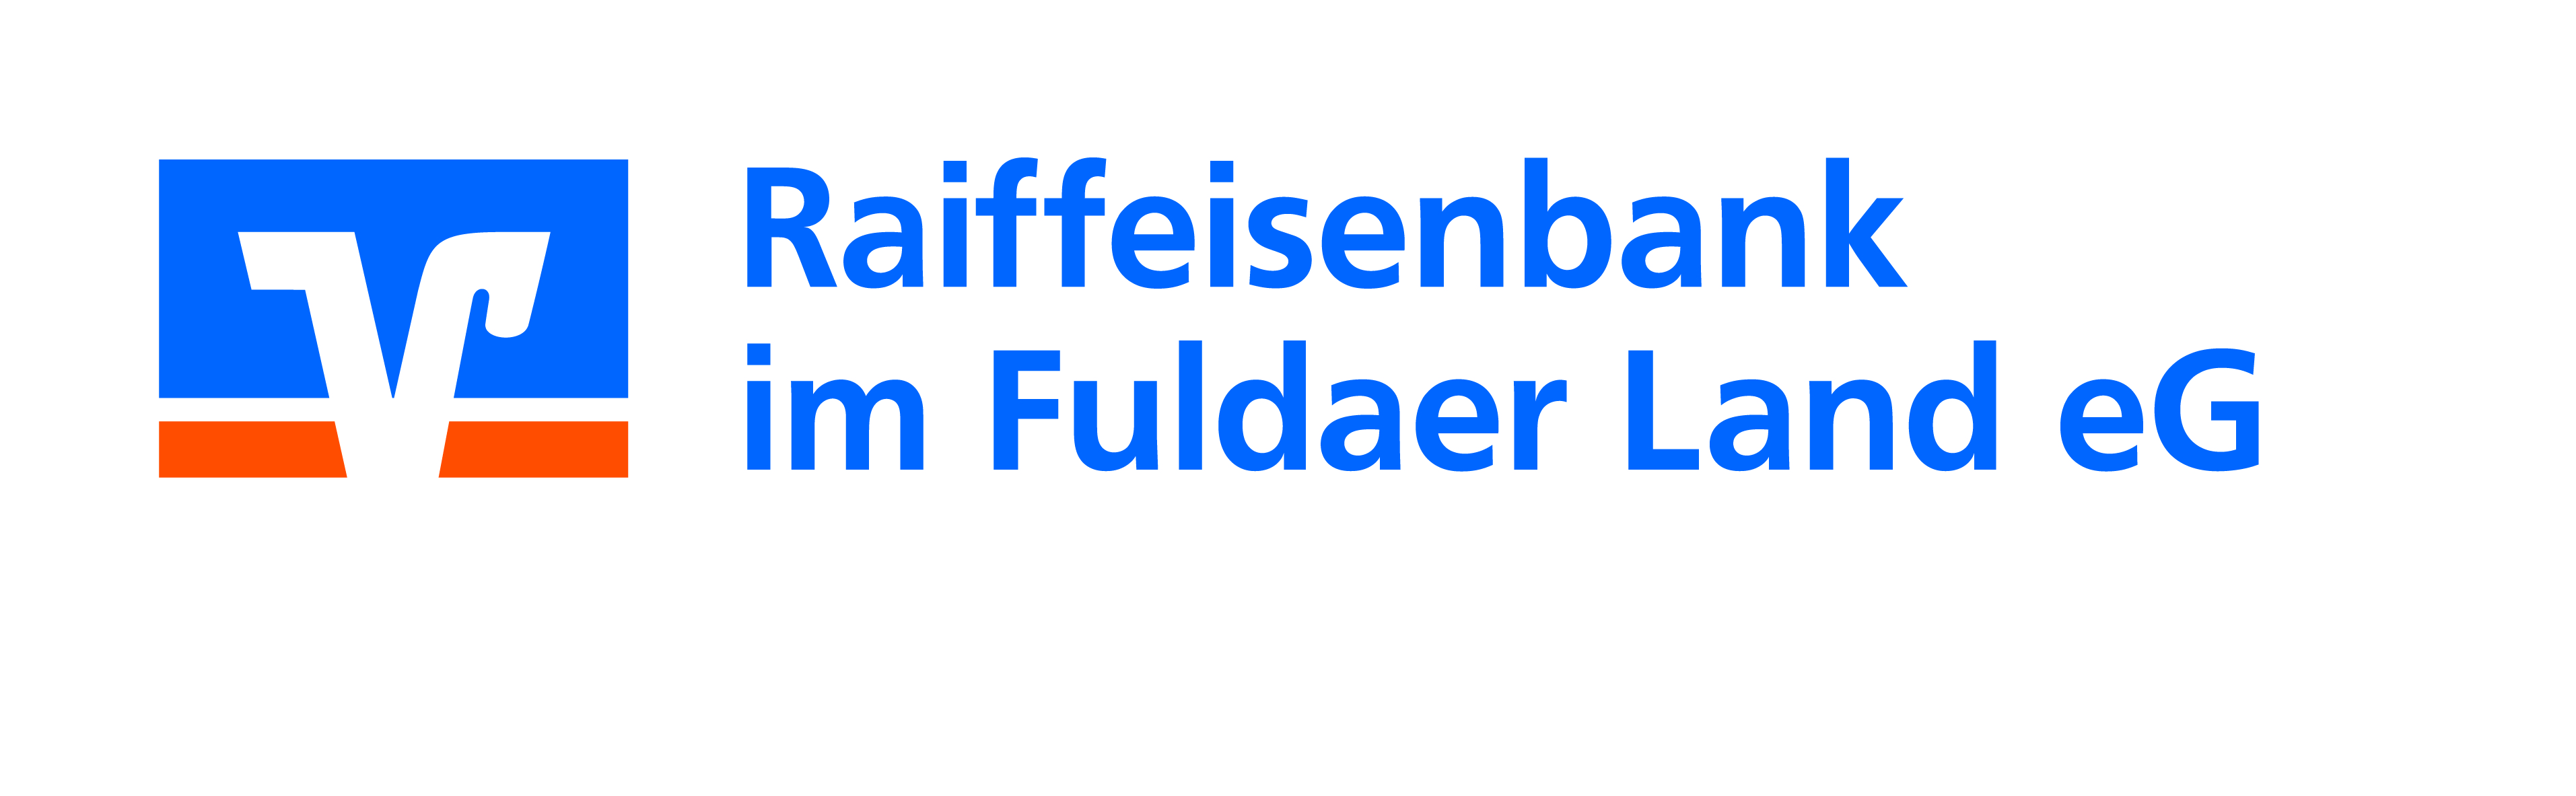 Raiba Fuldaer Land